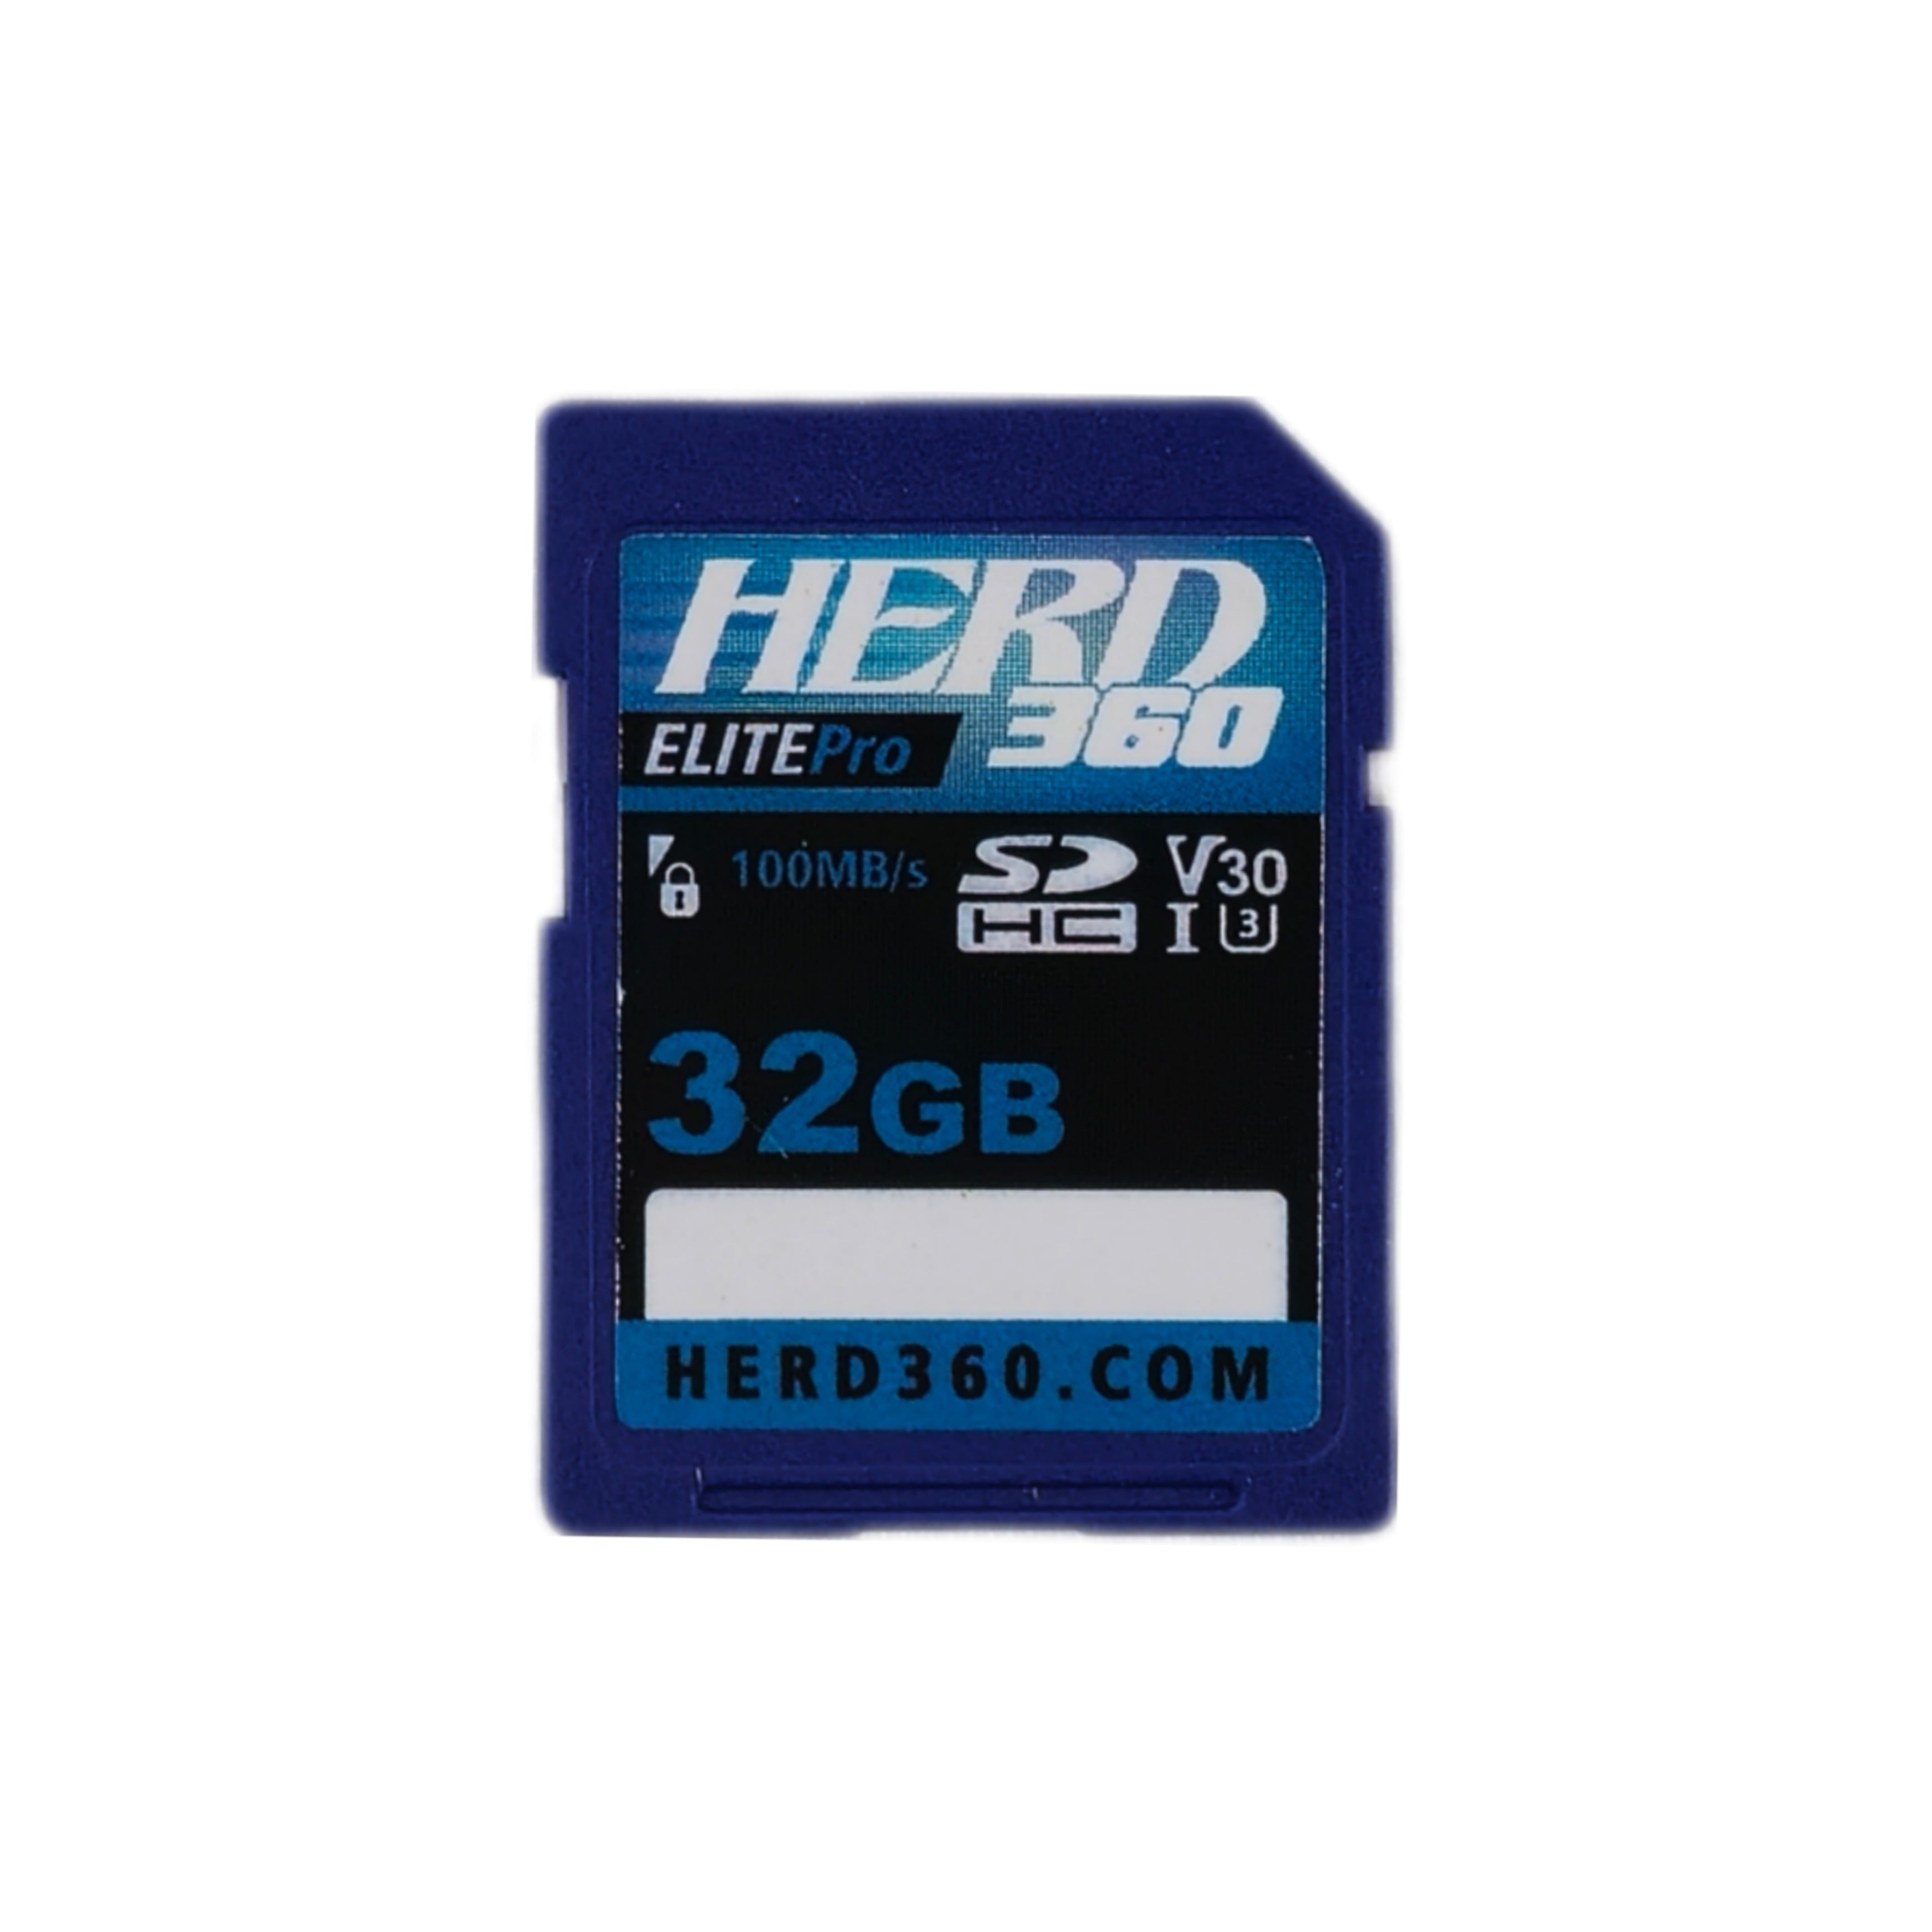 Herd 360 Elite Pro 32GB SD Card 100MB/s U3 Class 10